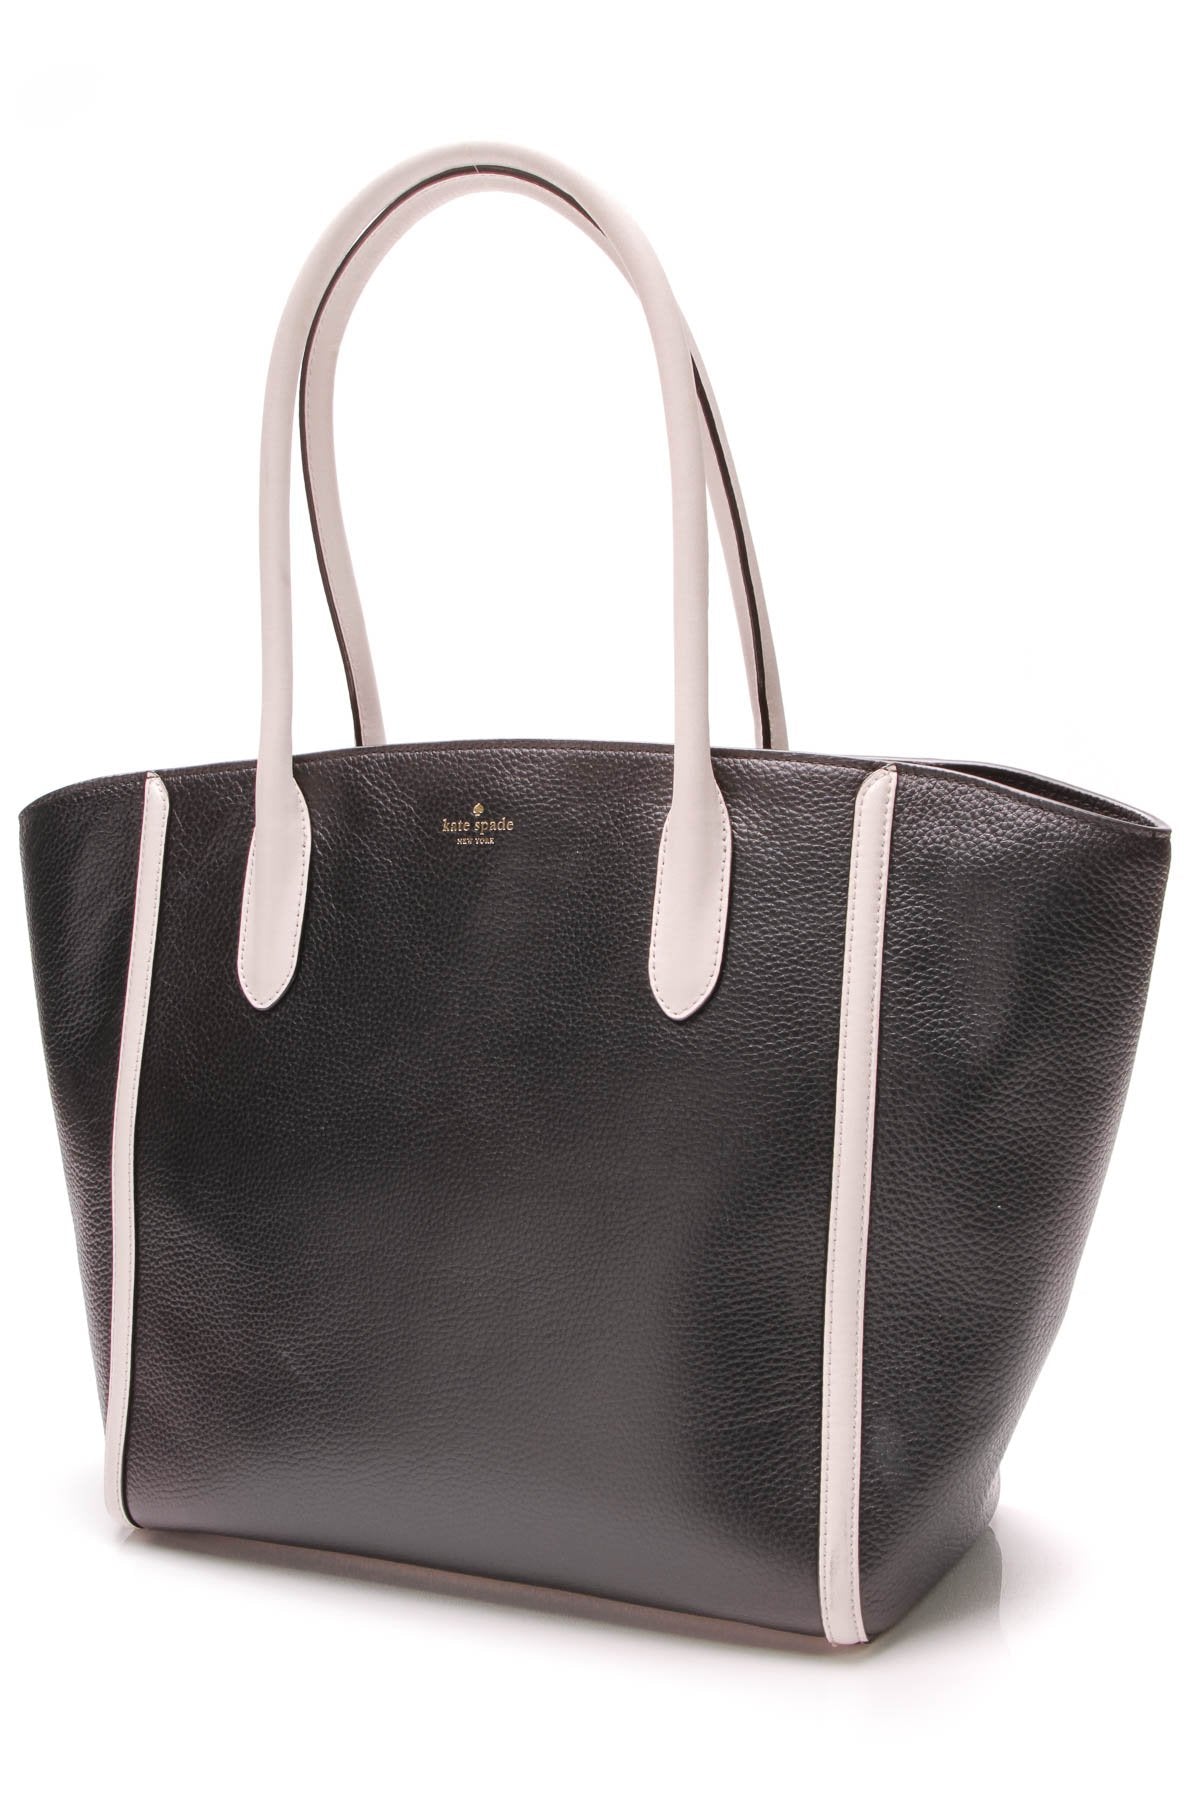 Forster Caroline Lane Tote Bag - Black – ZAK BAGS ©️ | Luxury Bags